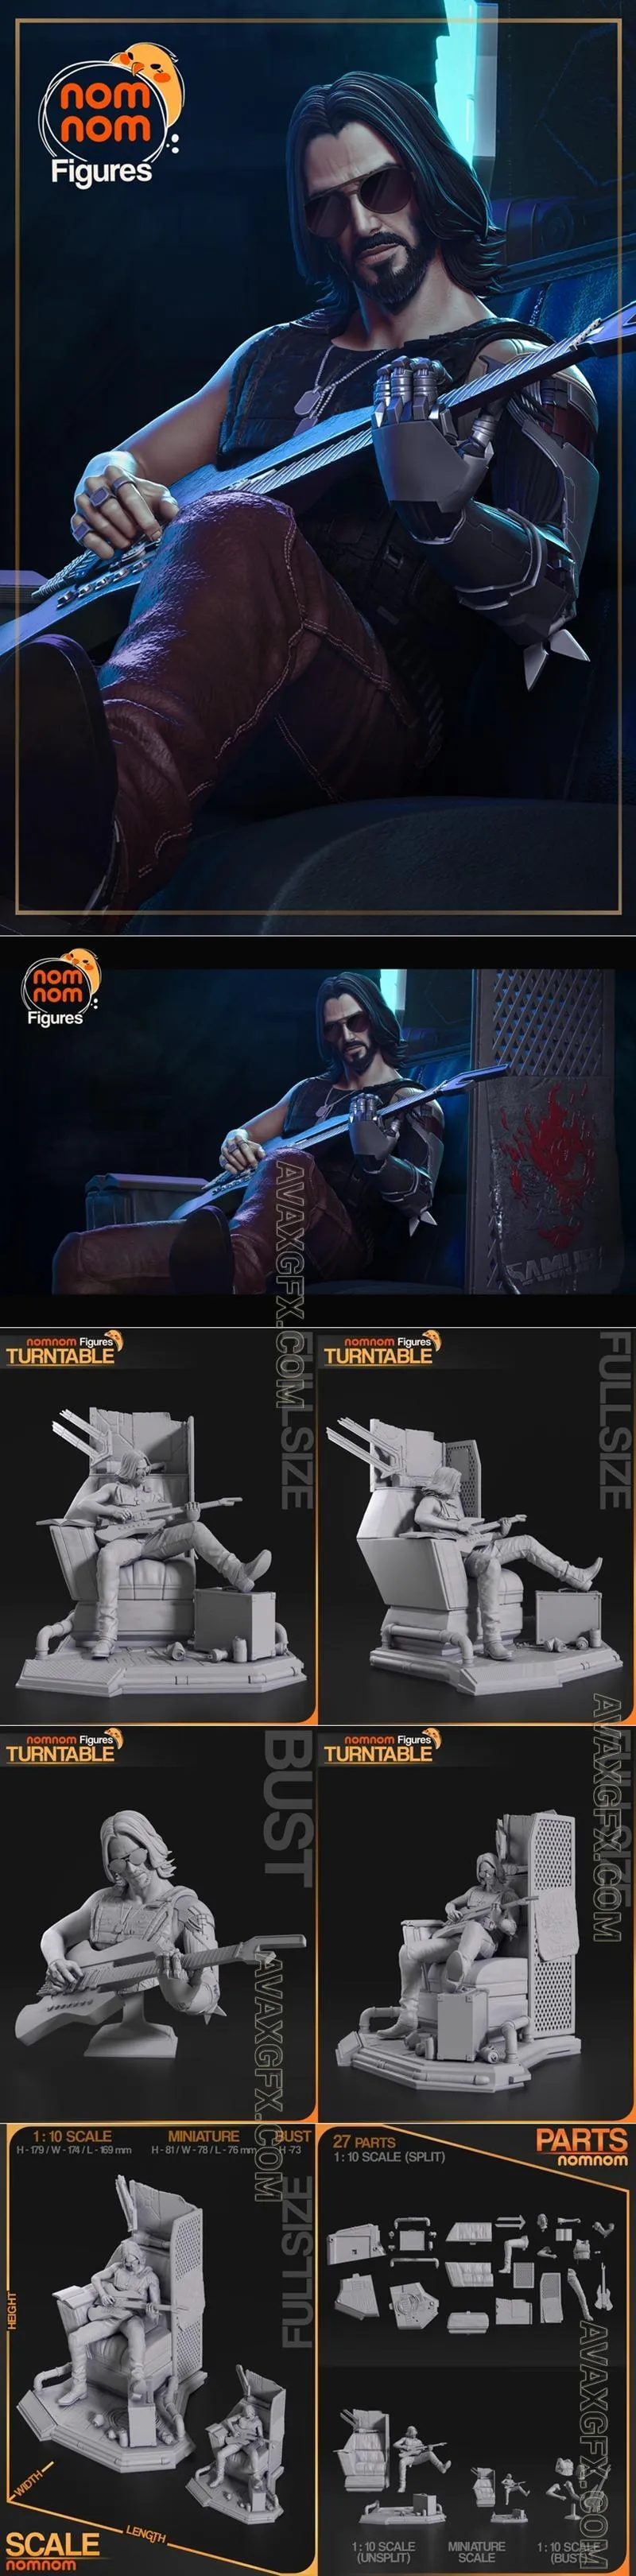 Nomnom Figures - Johnny Silverhand from Cyberpunk 2077 - STL 3D Model